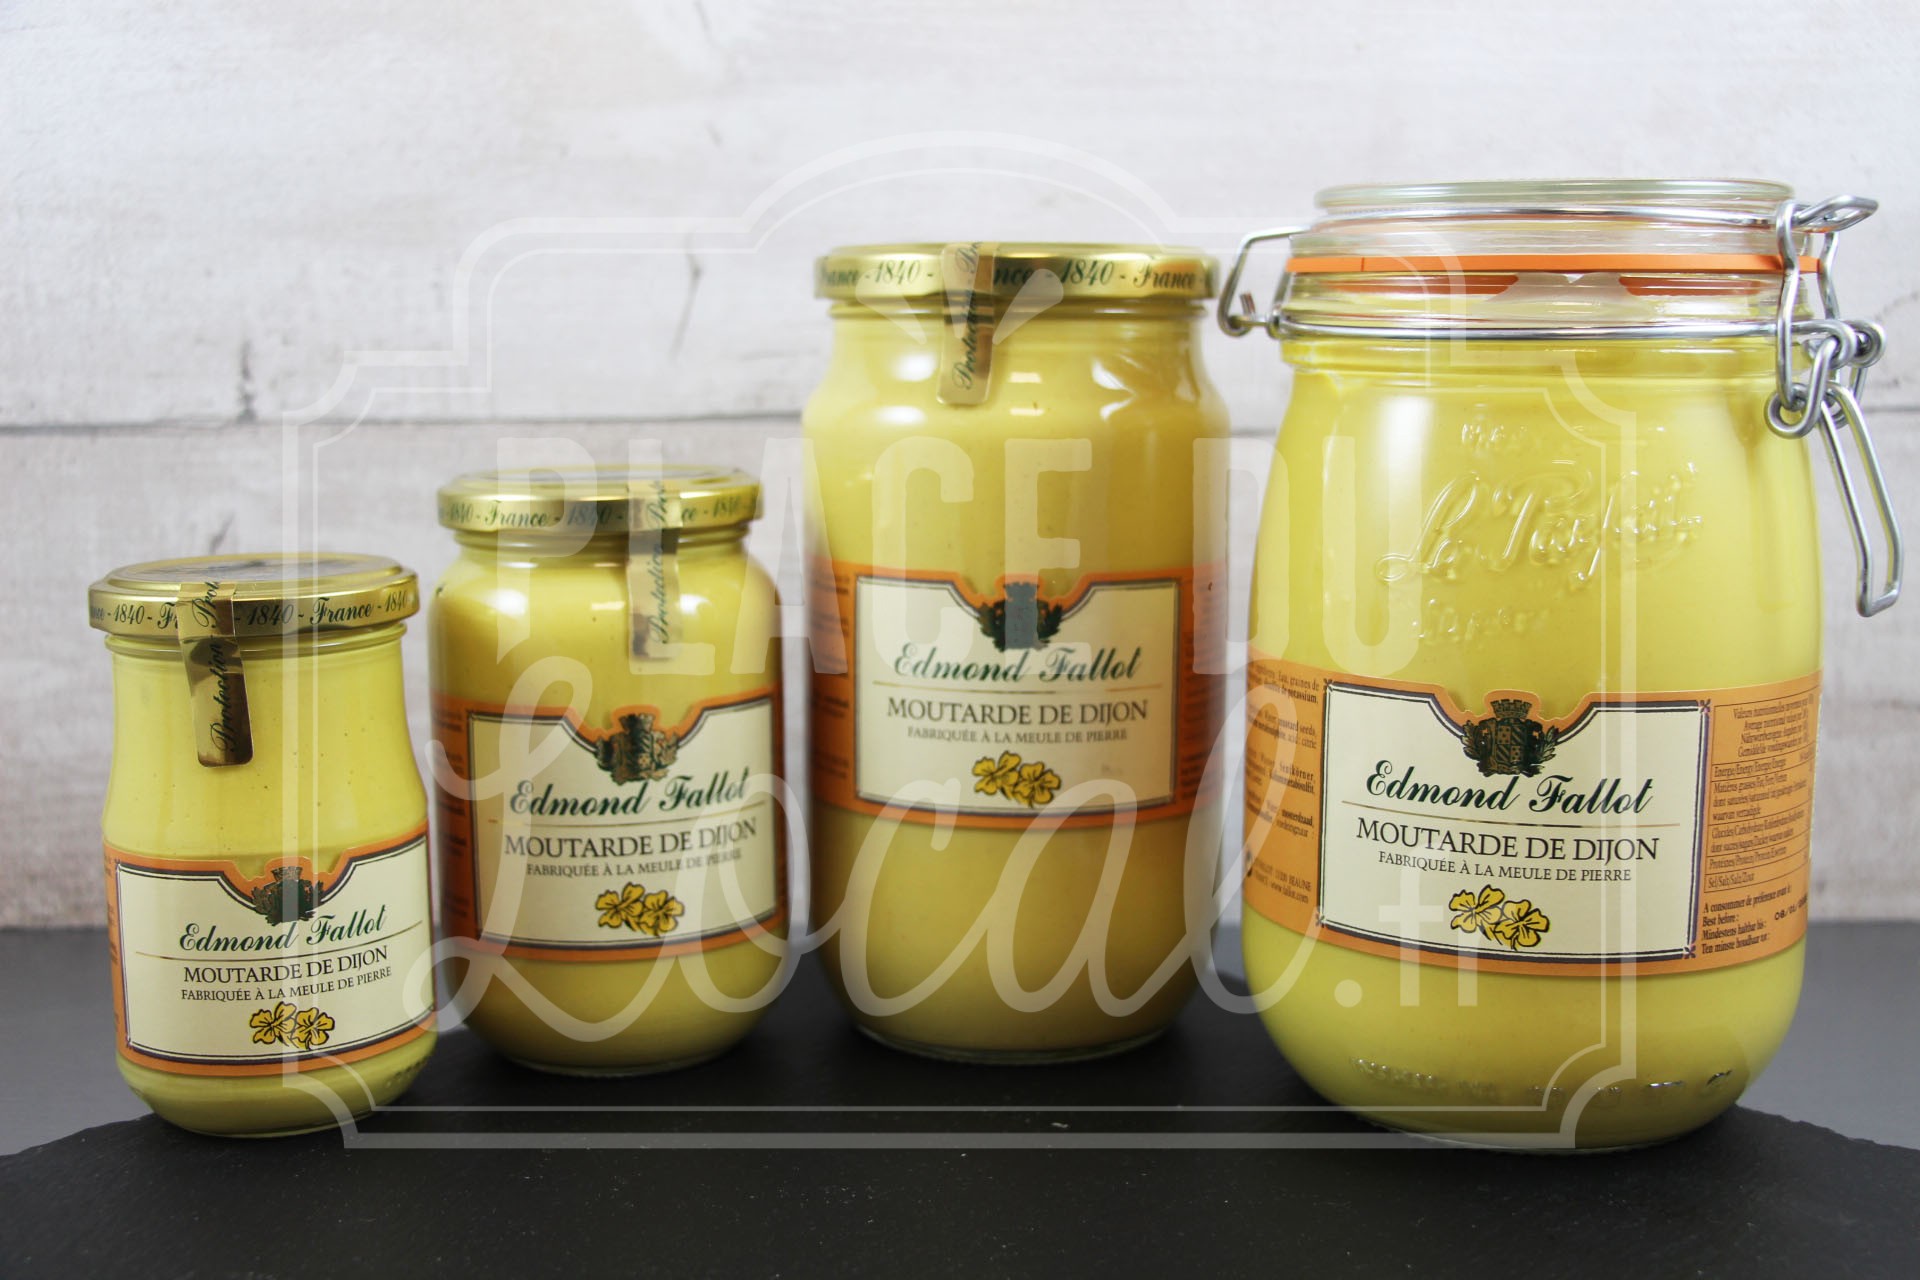 Moutarde graines jaunes – 1kg